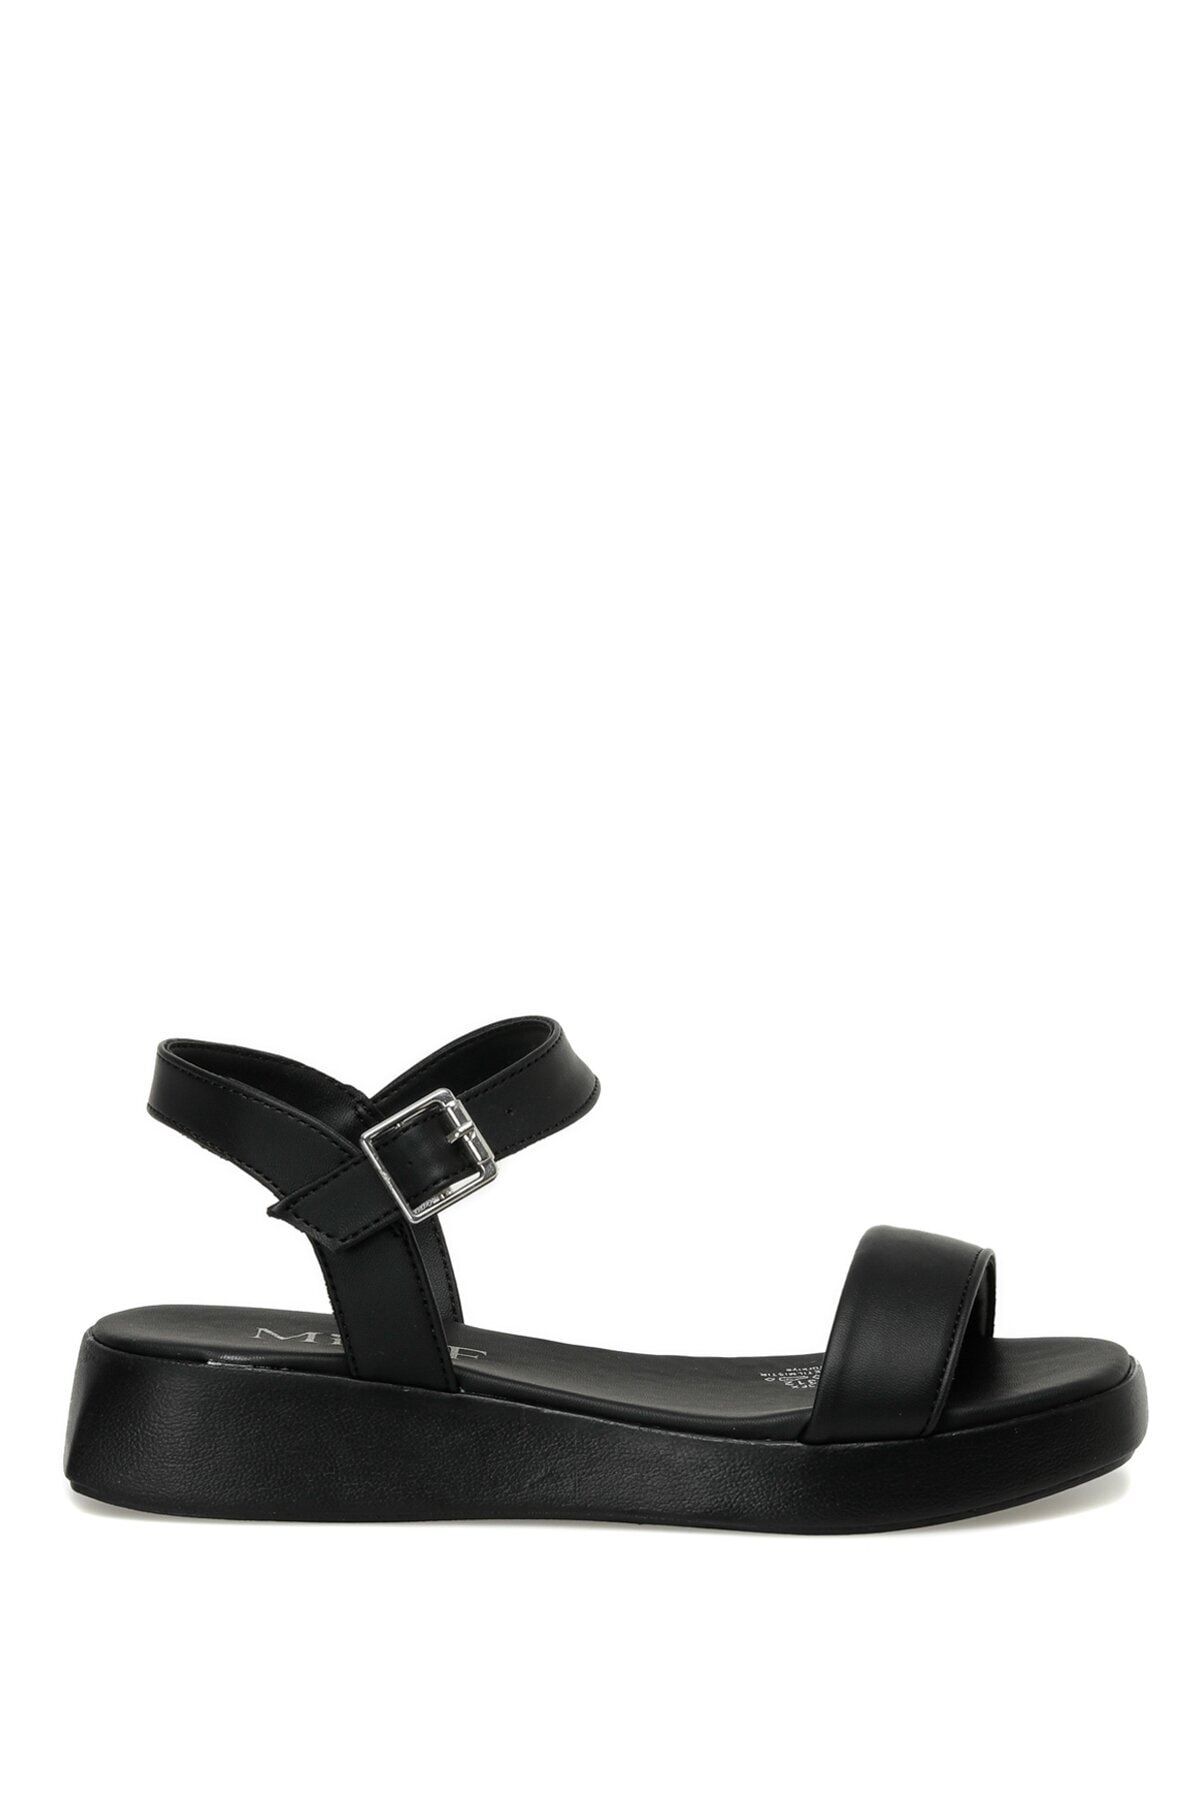 Missf Ds23021 3fx Siyah Kadın Dolgu Topuk Sandalet